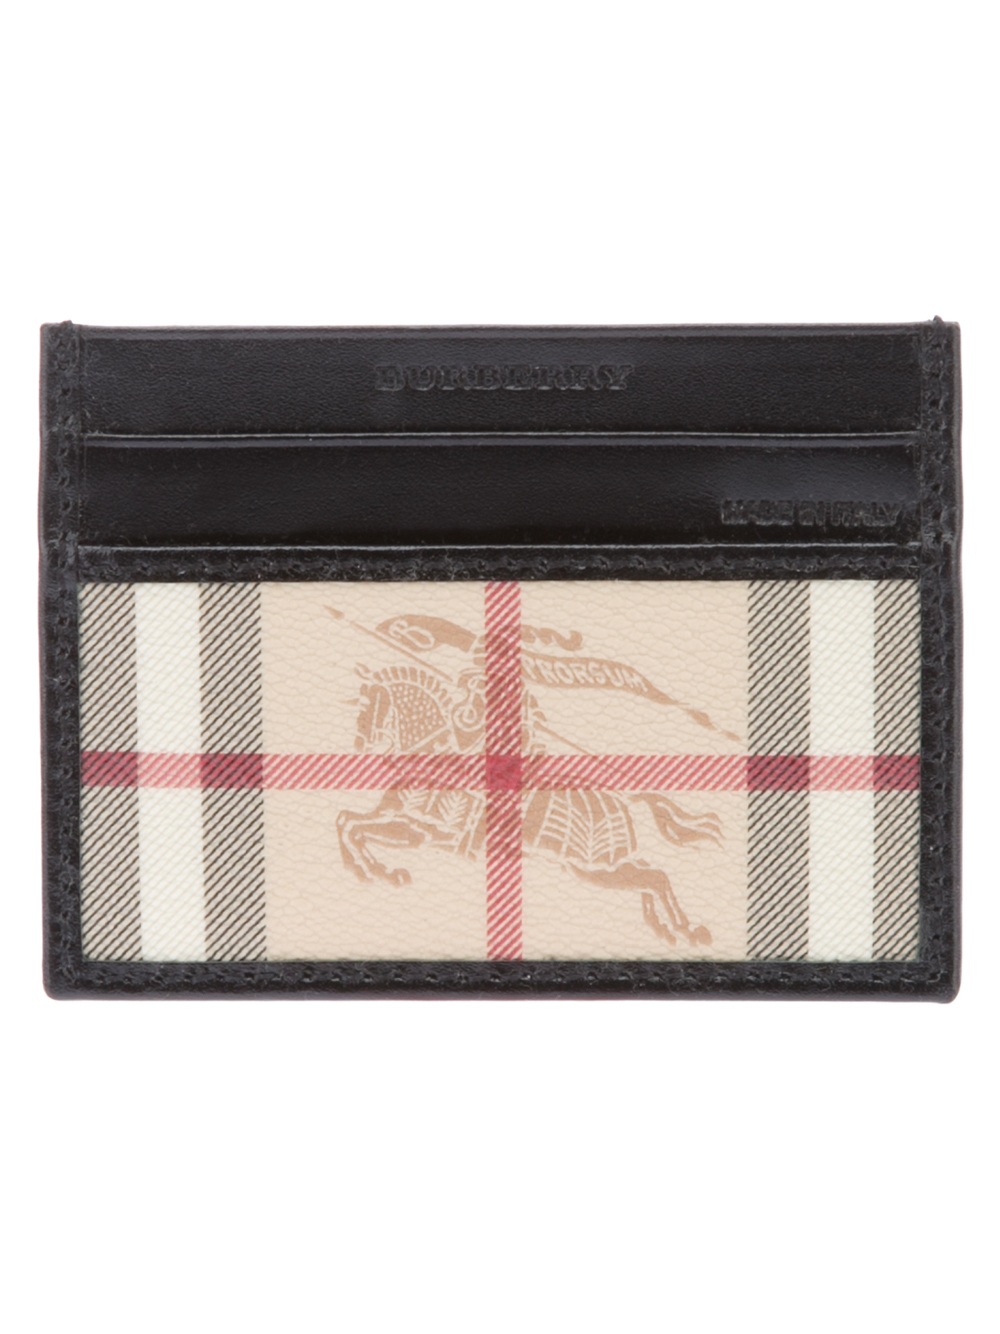 burberry men's wallet card holder